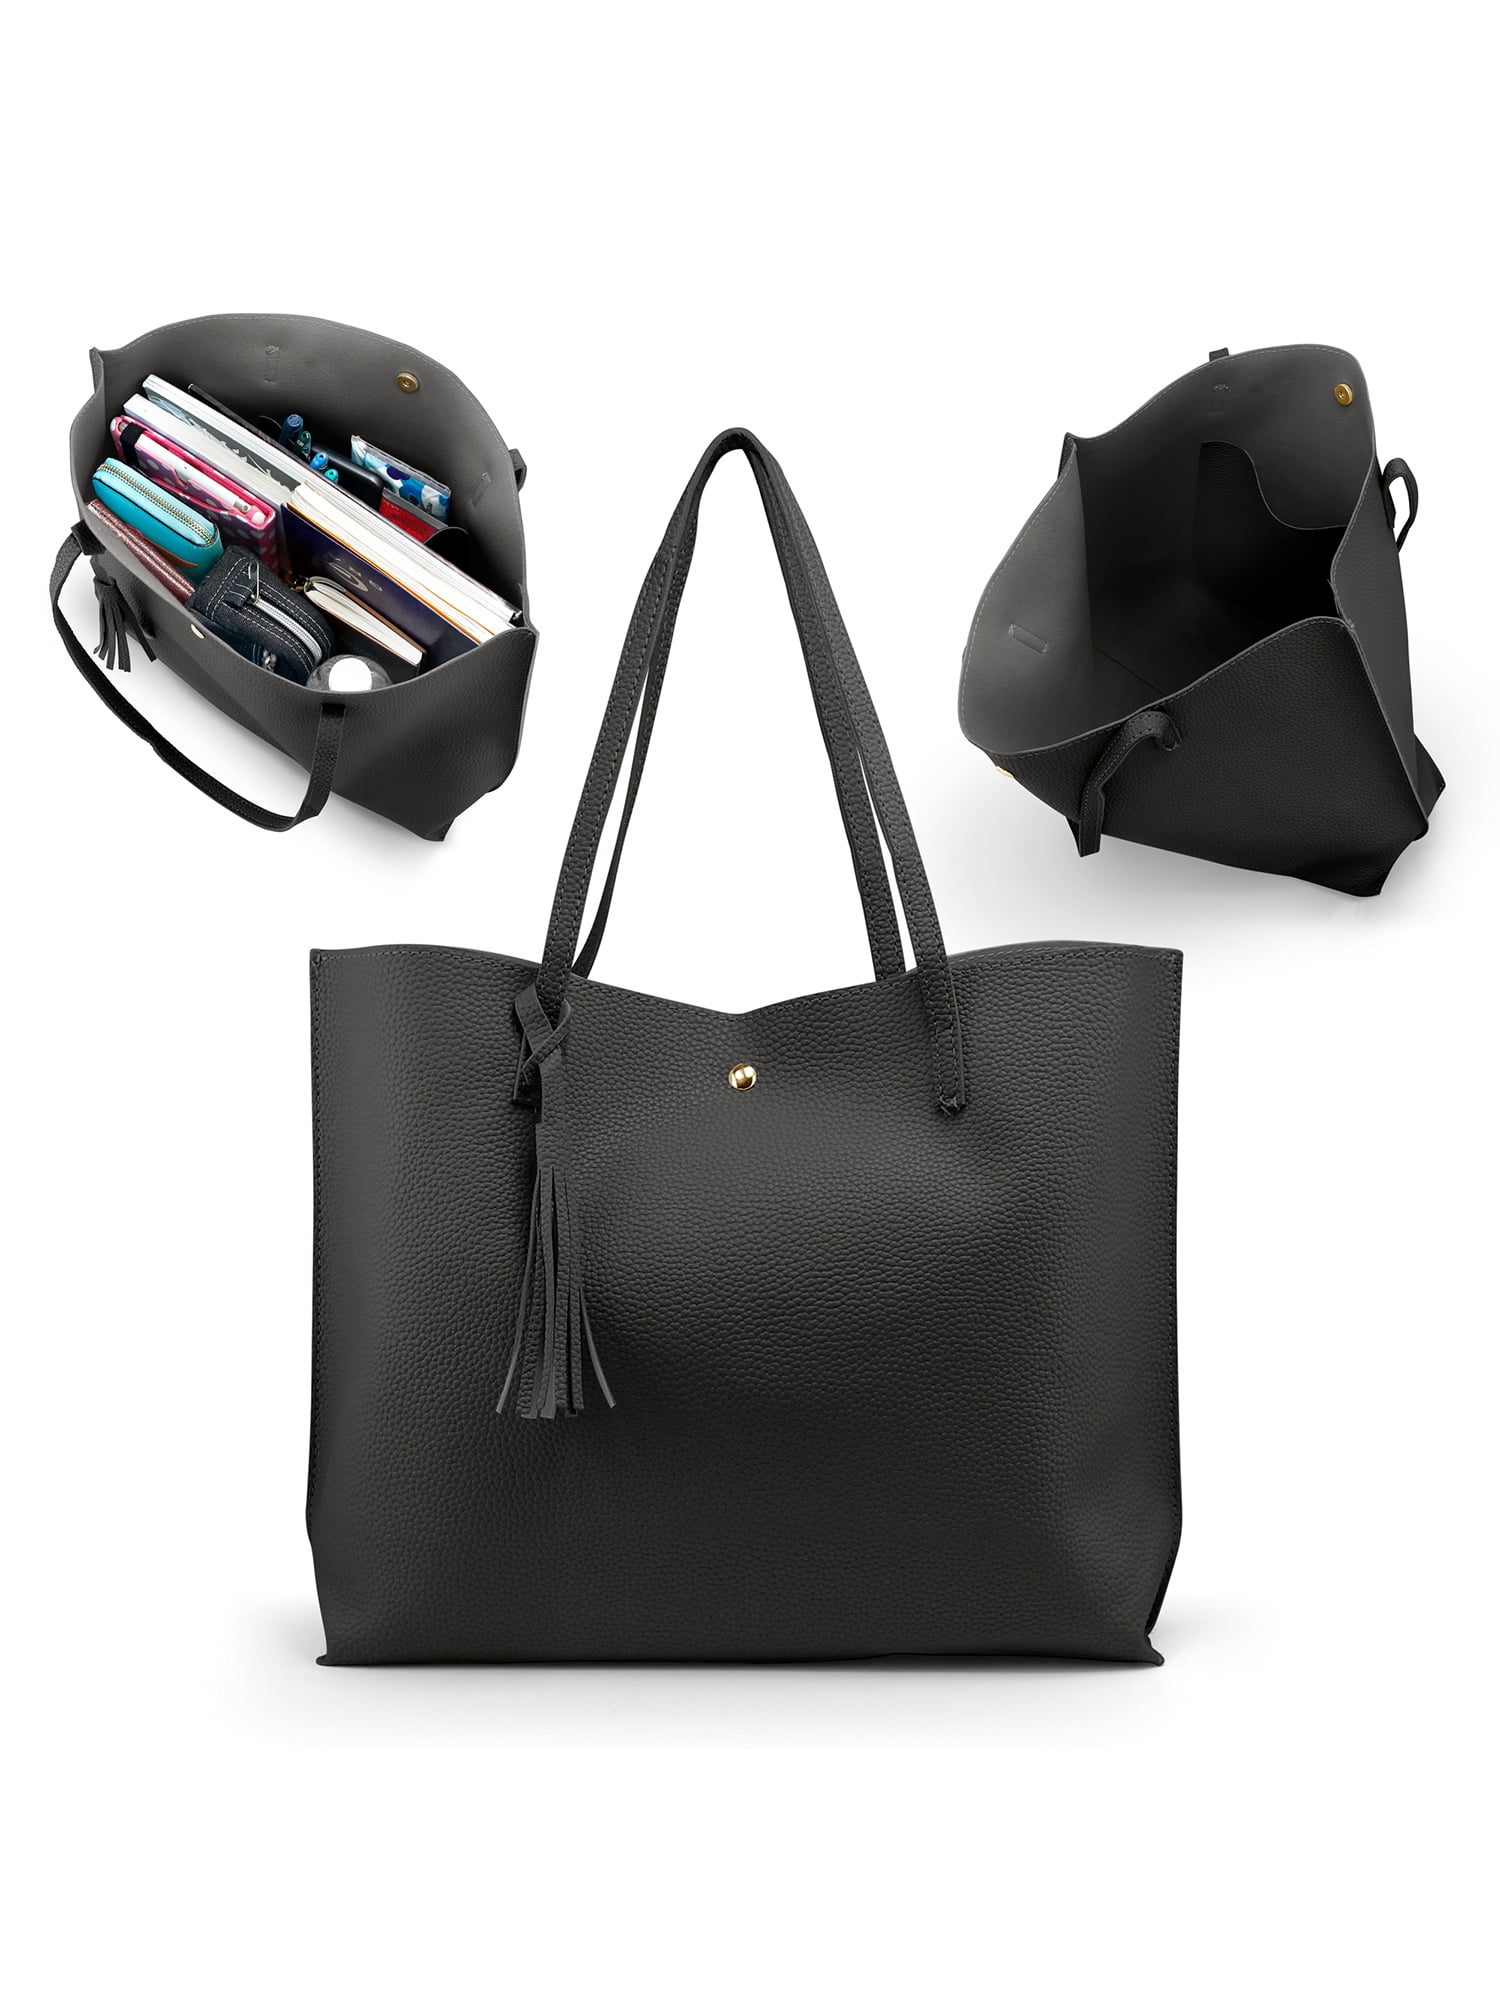 Ladies Cross Body Messenger Bag Women Shoulder Bags Tote Satchel Handbag Tassel 